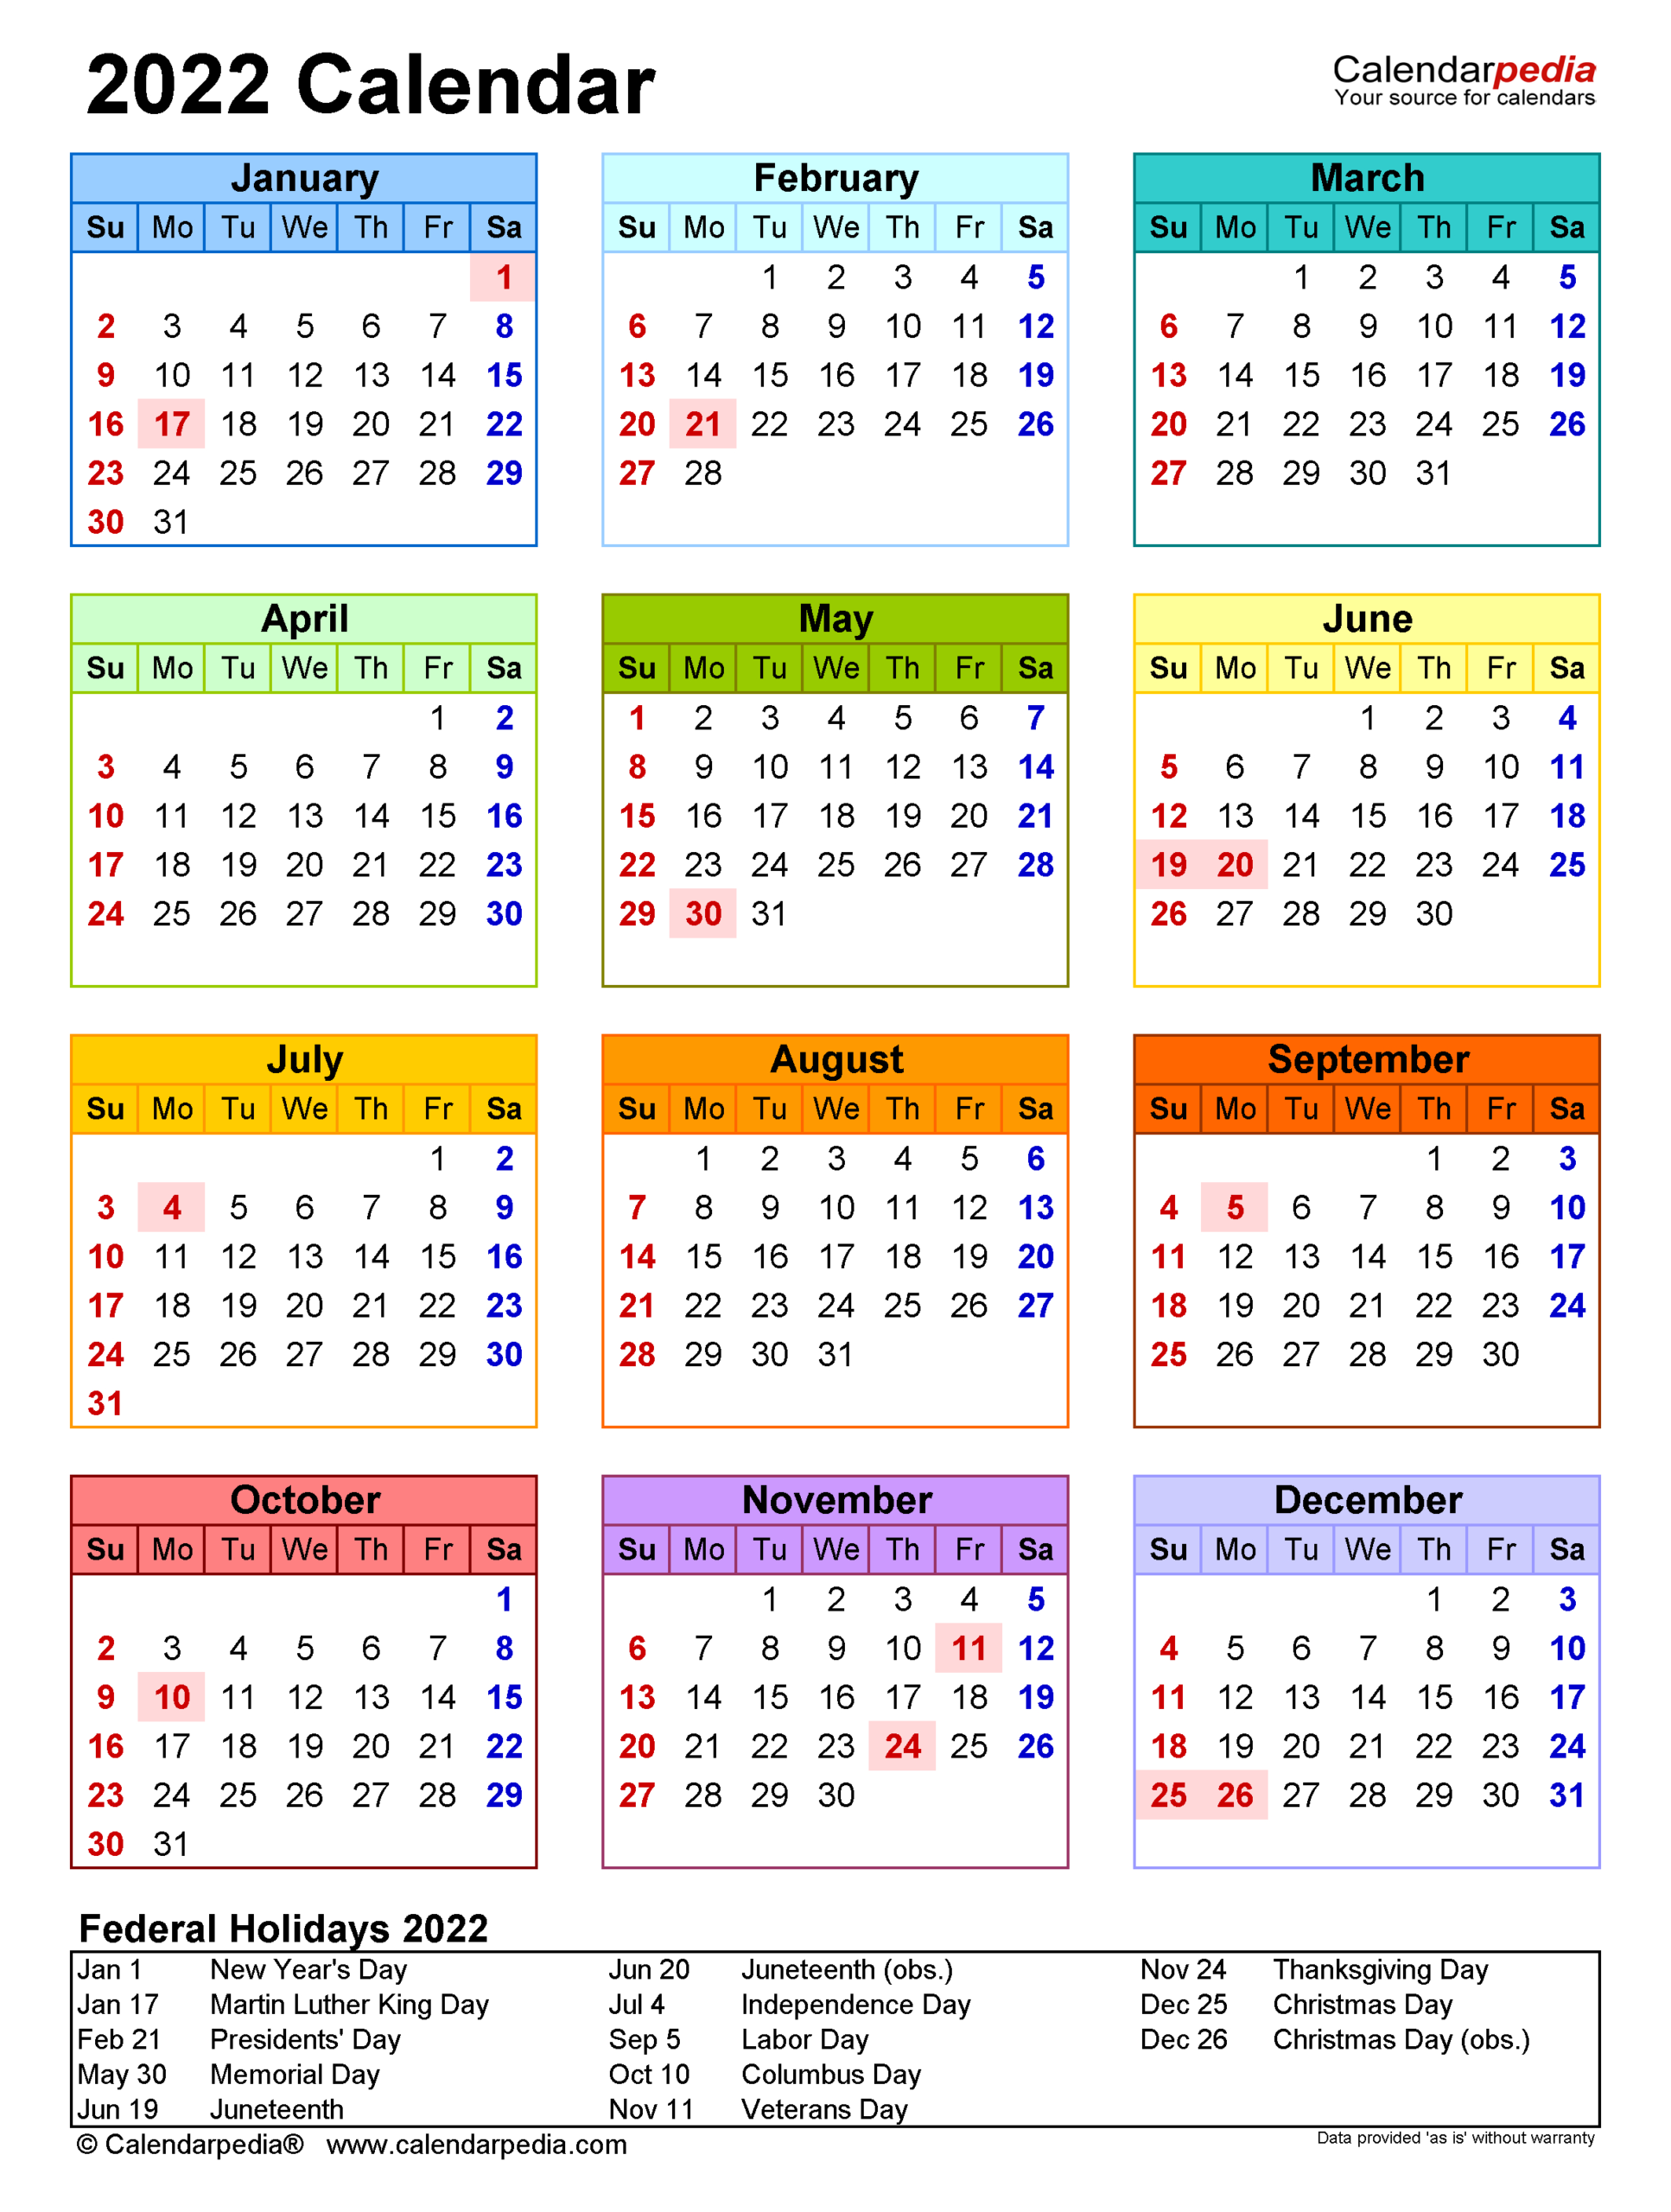 2022 Calendar - Free Printable Word Templates - Calendarpedia  Free Printable Calendar 2022 In Word